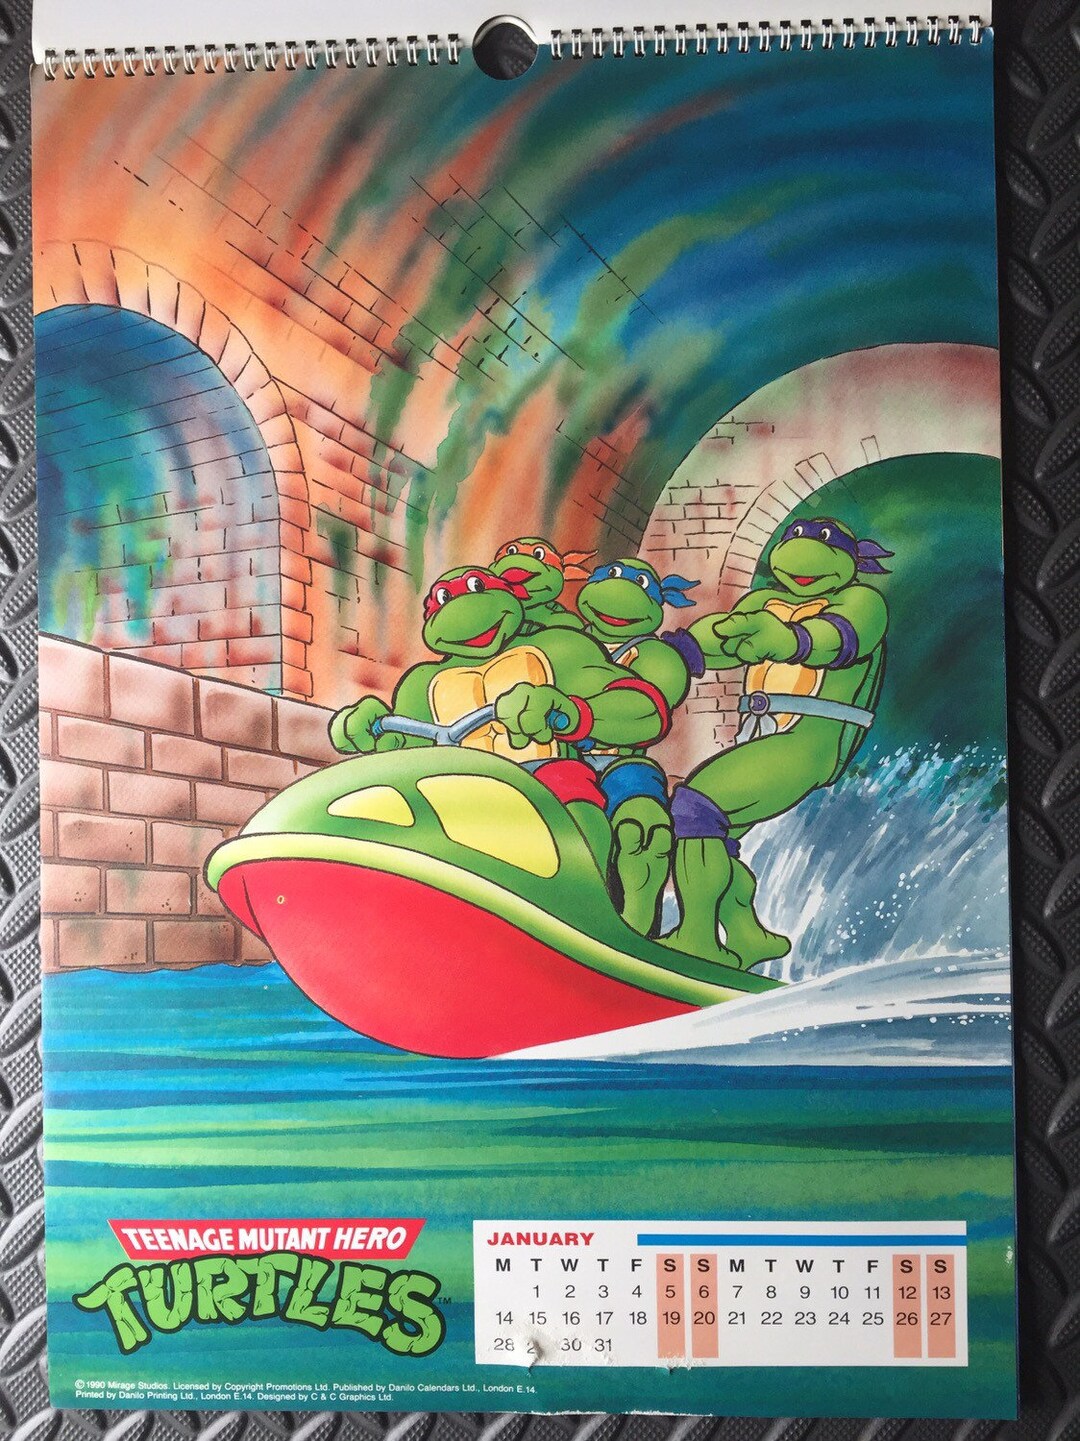 Teenage Mutant Ninja Turtles 16-Month 2024 Wall Calendar